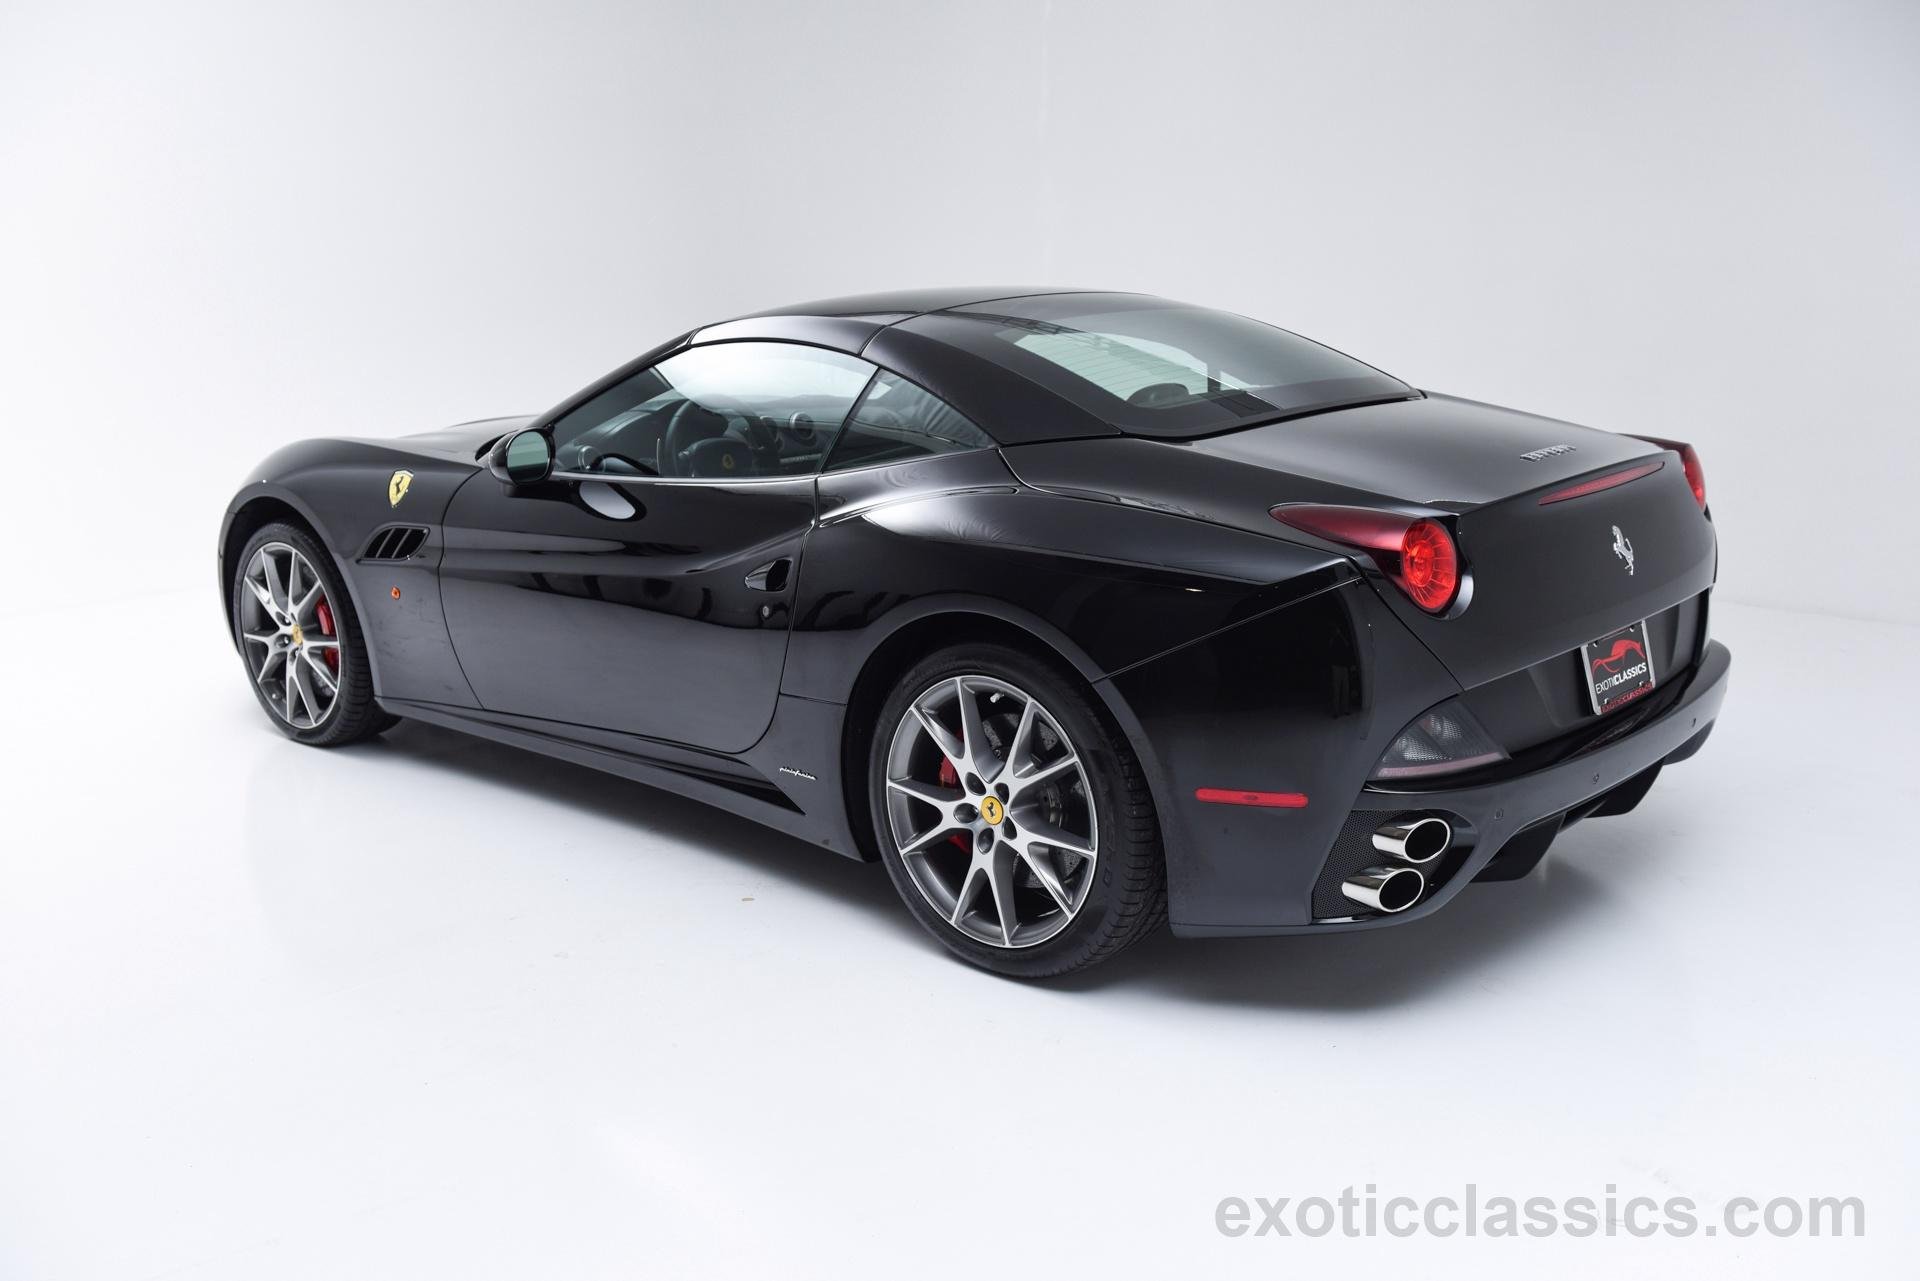 2012, Ferrari, California, Convertible, Nero, Black, Cars Wallpaper